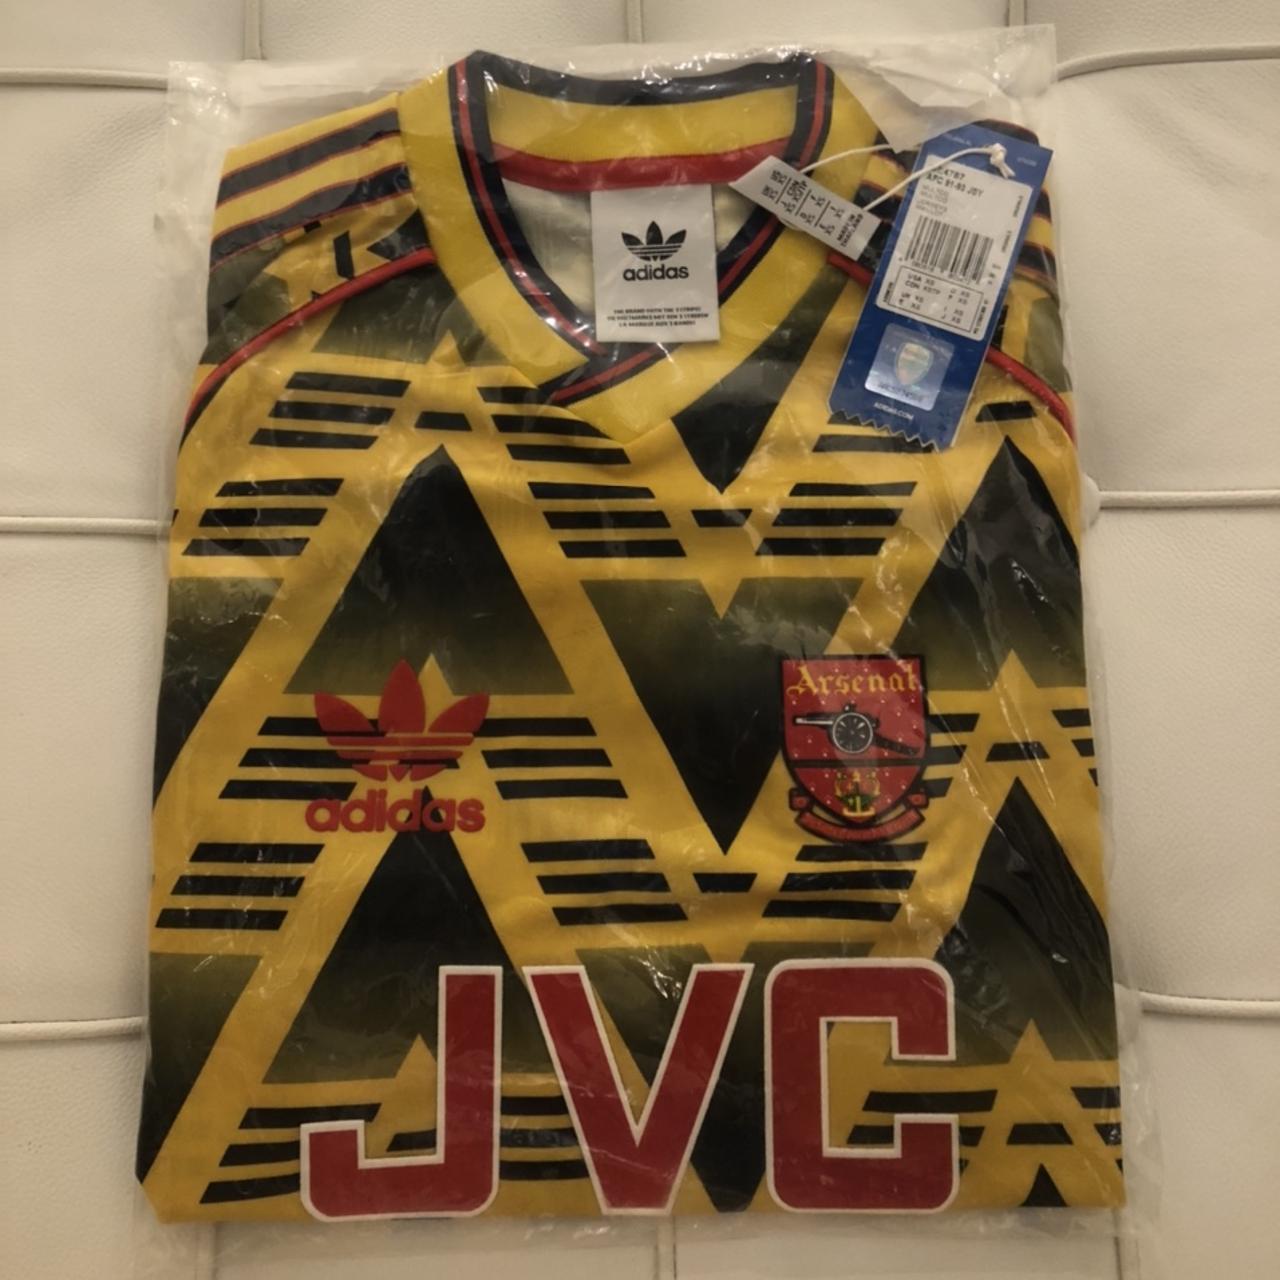 Arsenal Bruised Banana Away shirt 1991-93 Depop